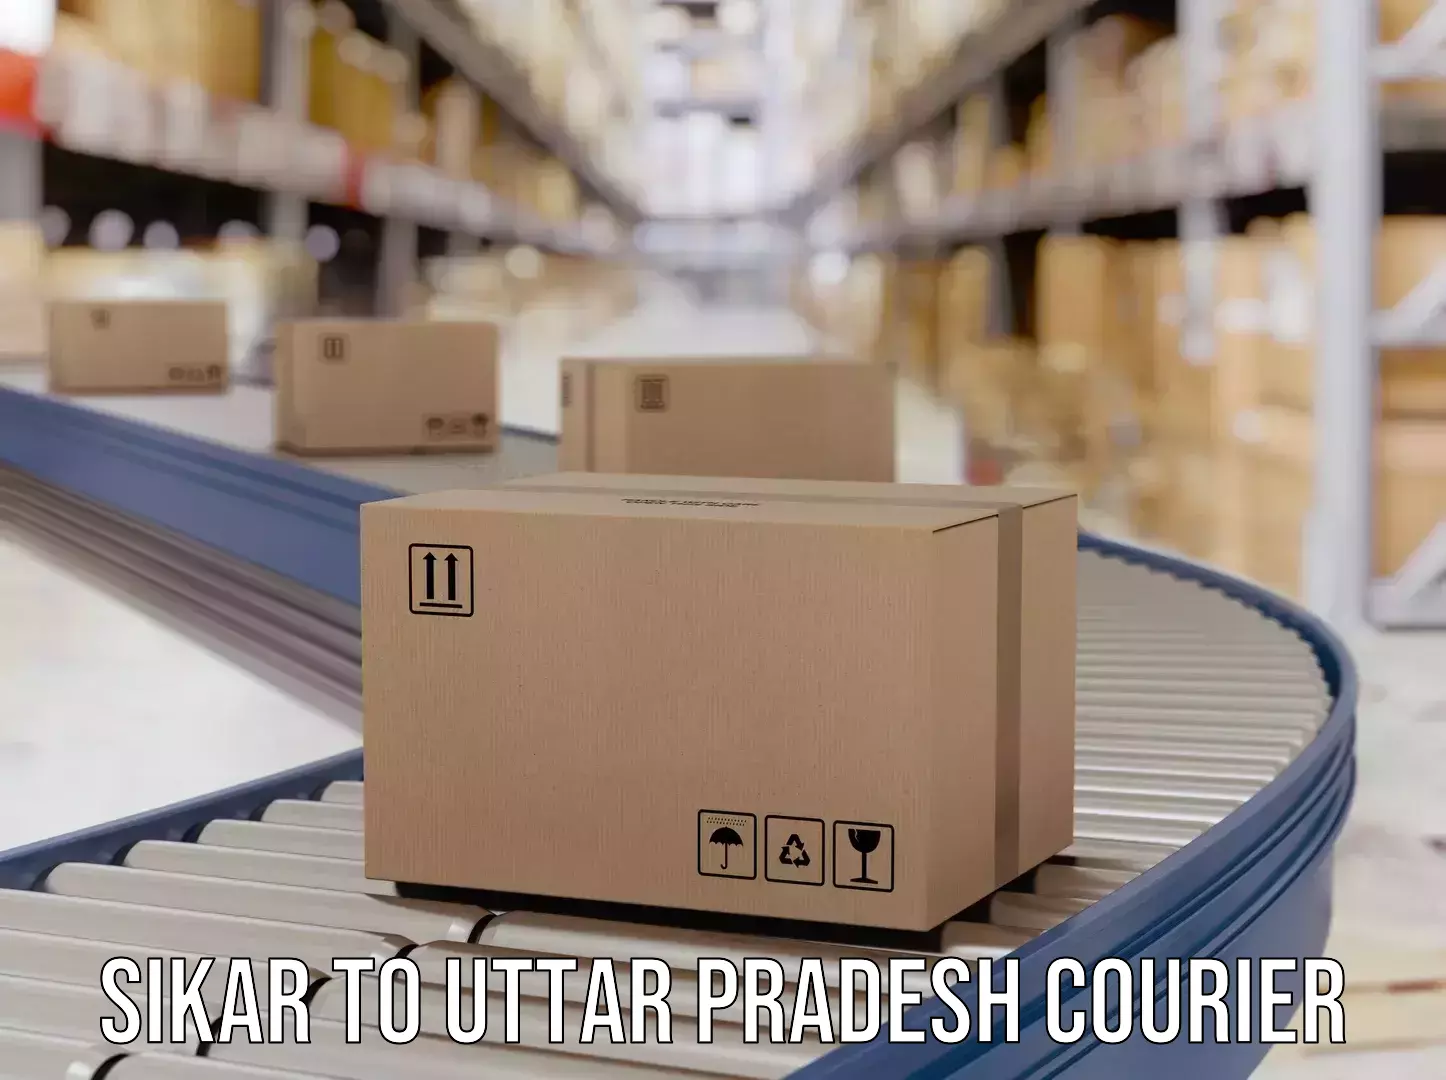 Courier service comparison Sikar to Uttar Pradesh